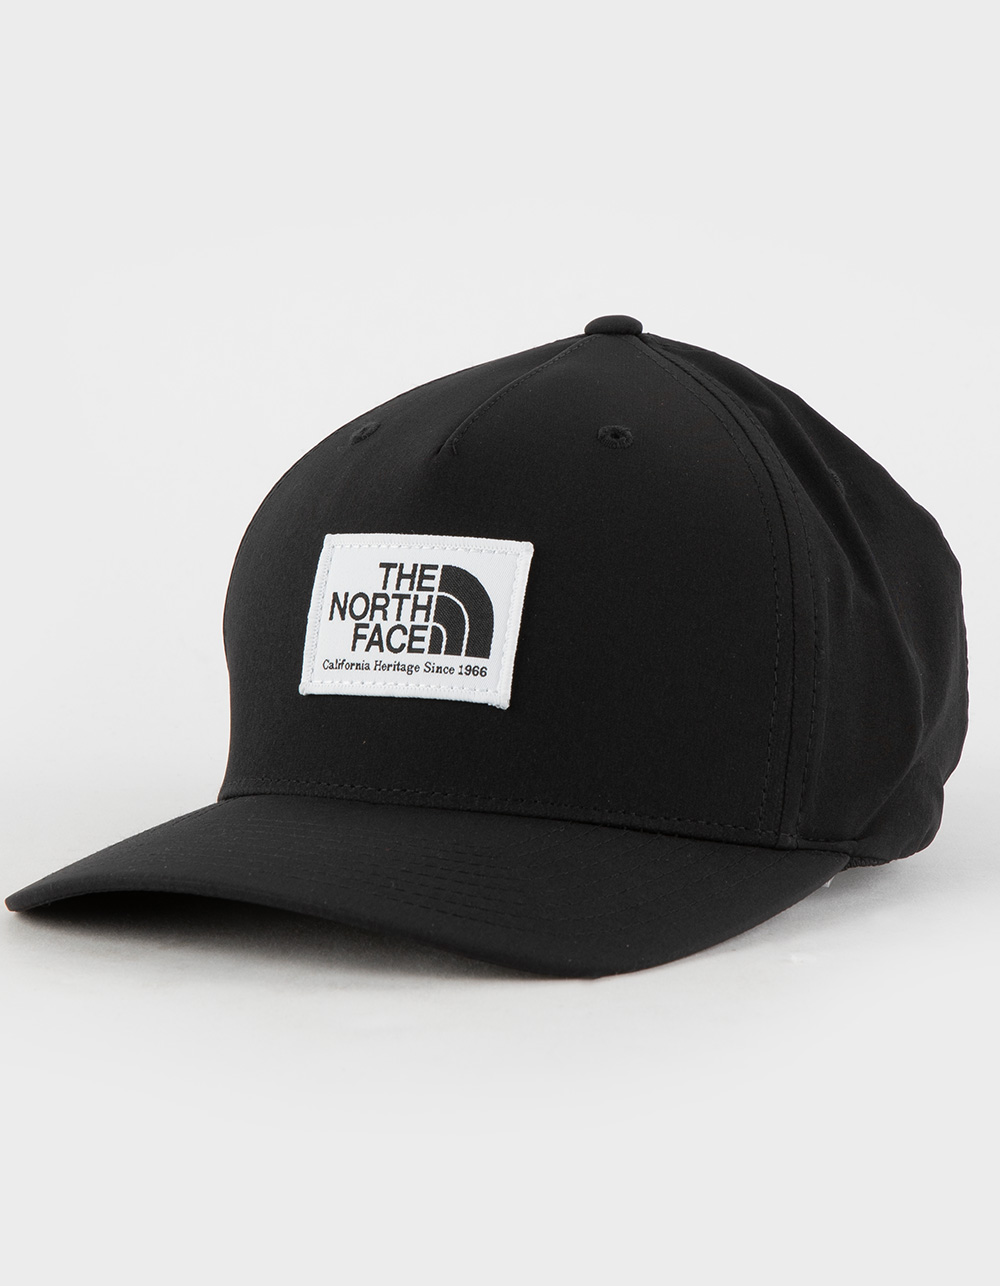 THE NORTH FACE Keep It Tech Flexfit Strapback Hat - BLACK | Tillys